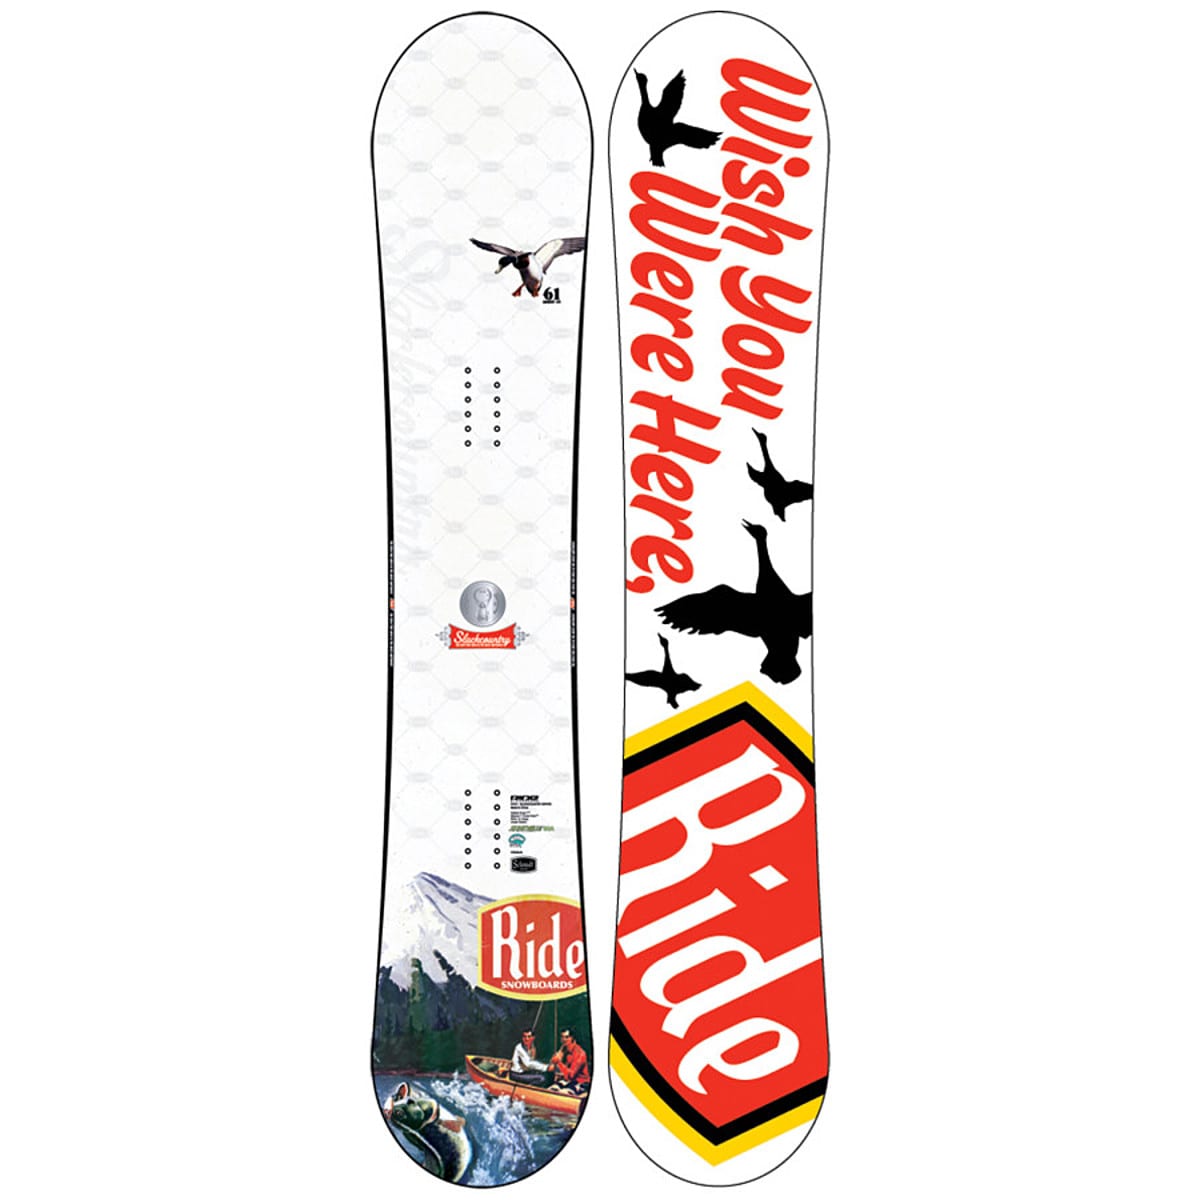 Christian Reductor Cokes Ride Slackcountry Snowboard - Snowboard